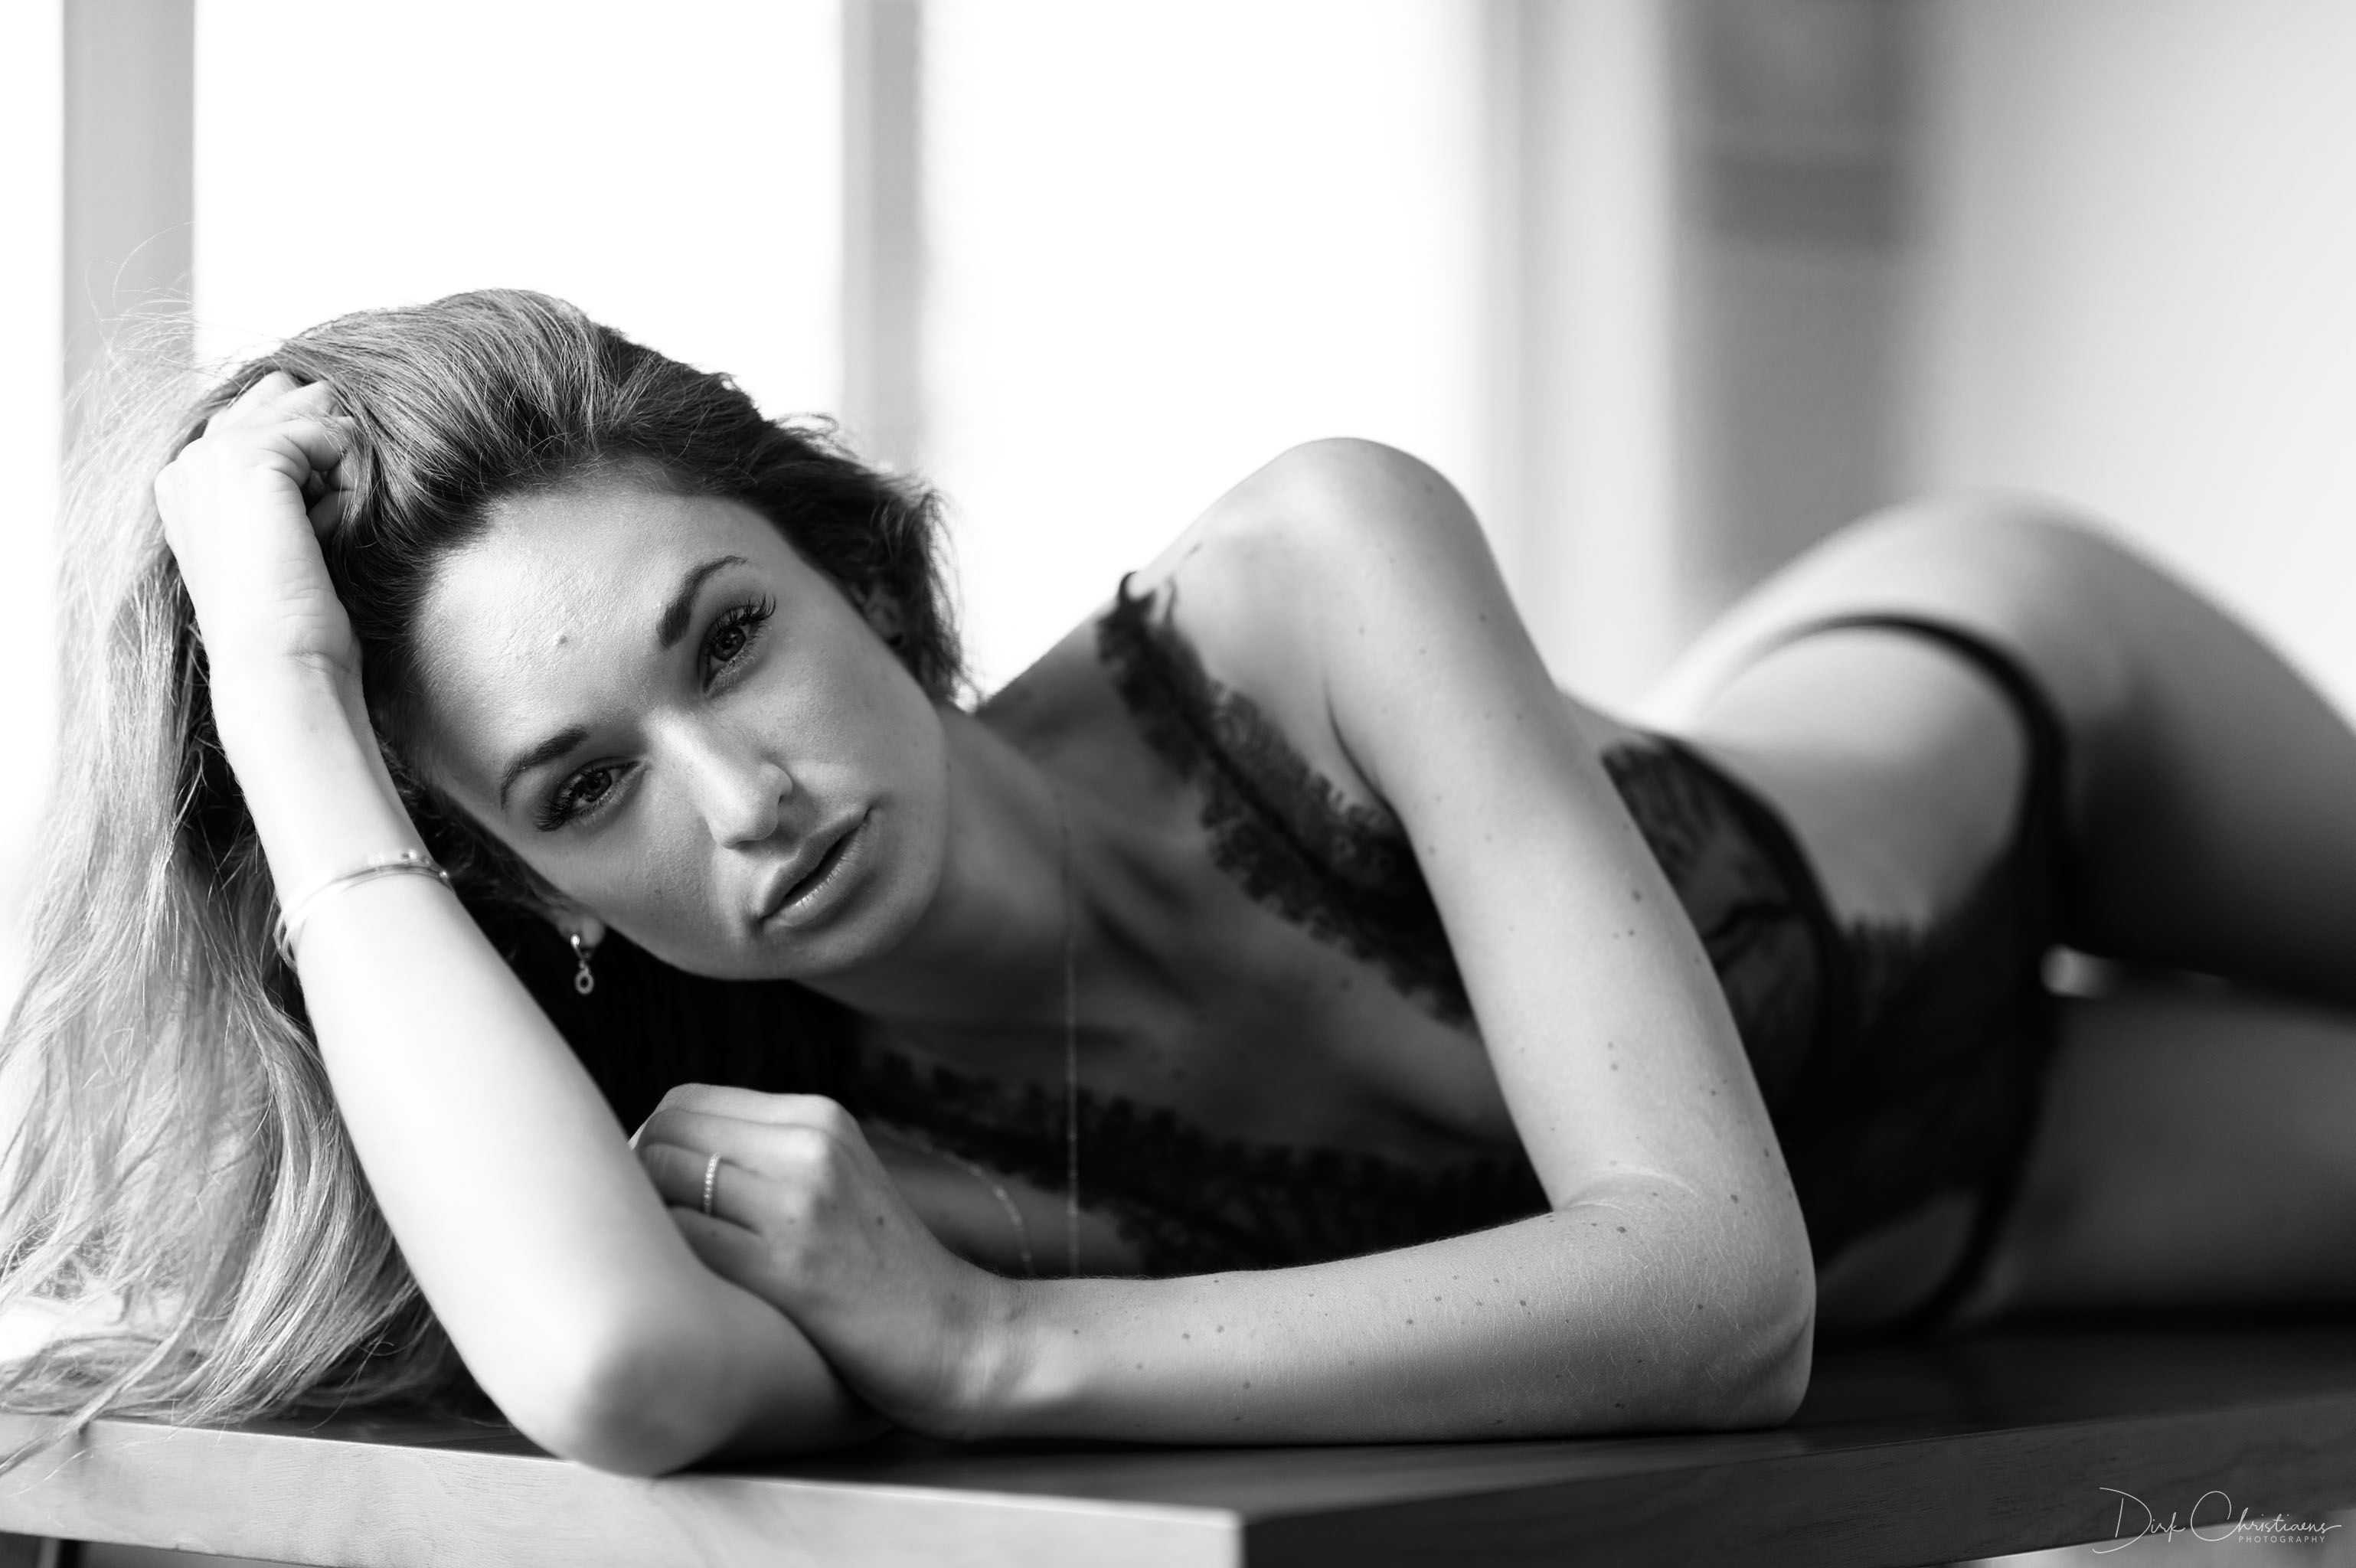 Morgane, model from Belgium at a boudoir photoshoot